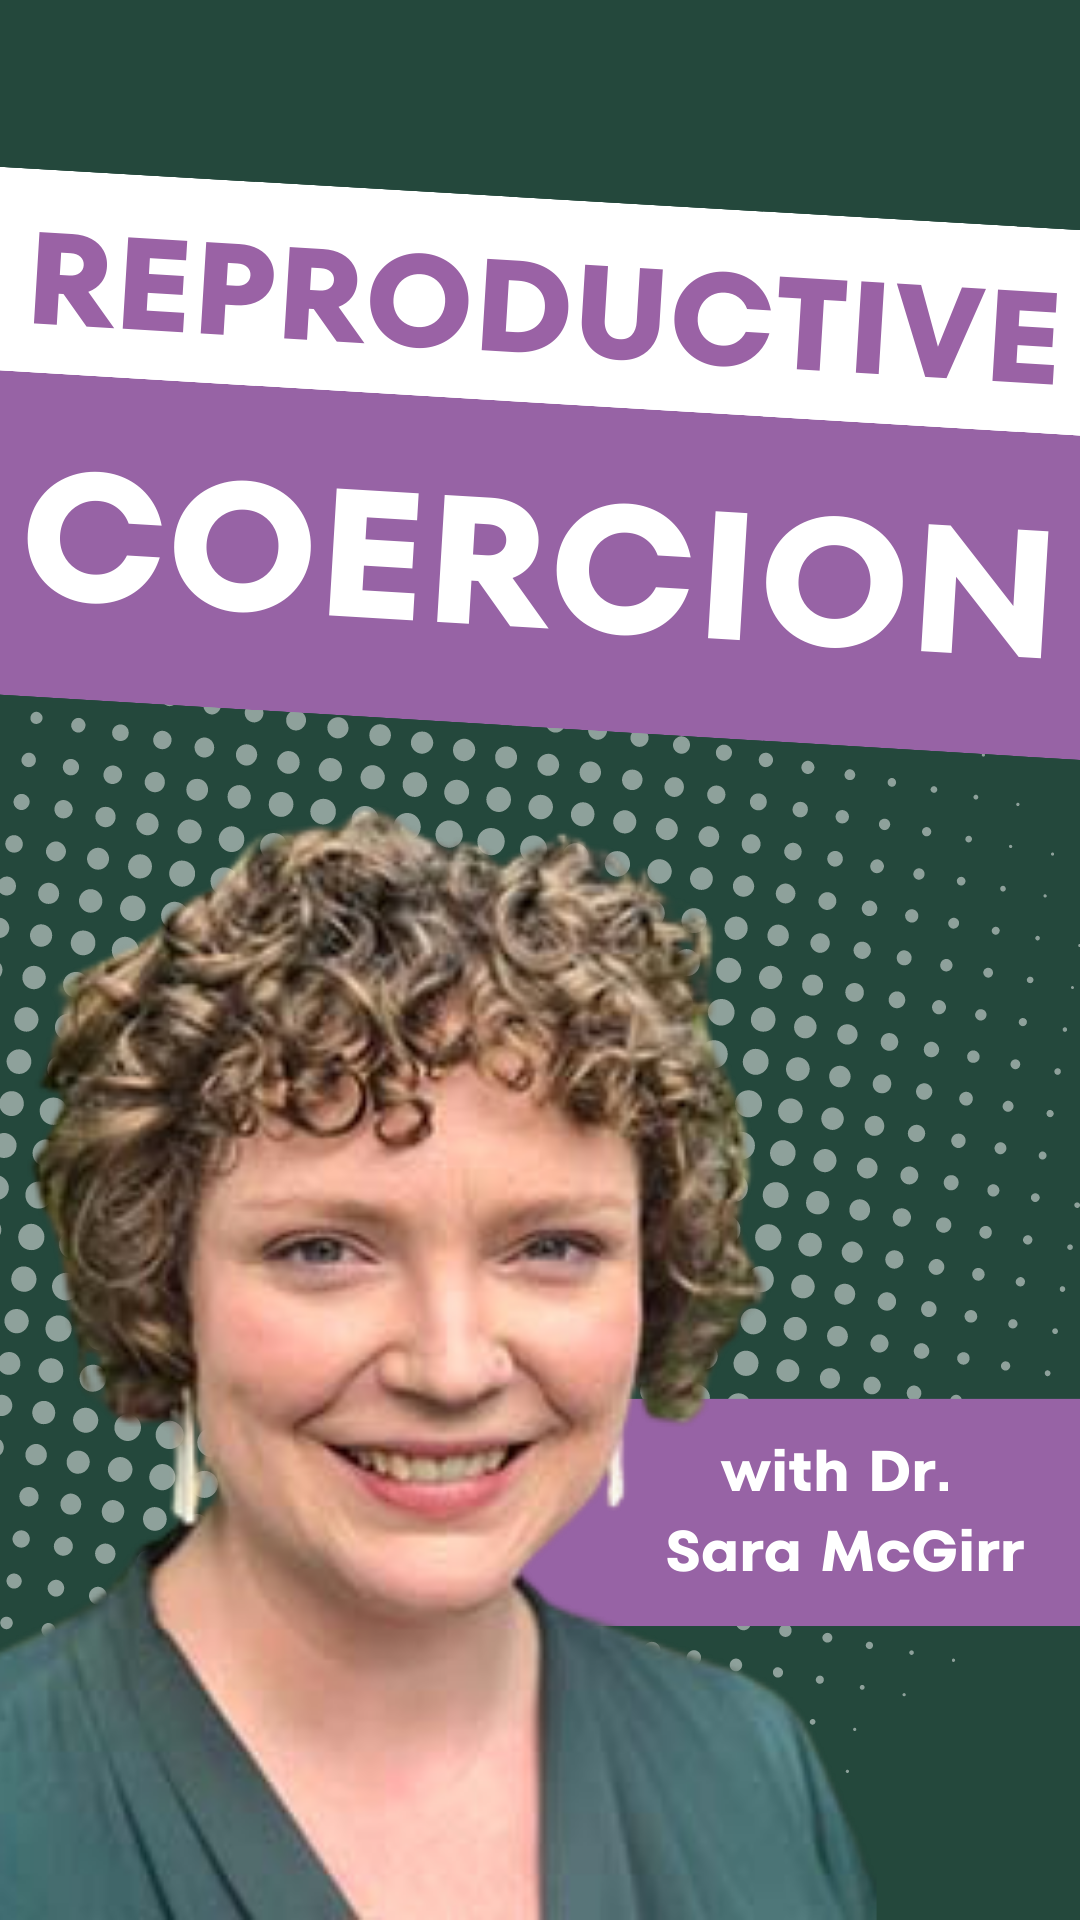 Reproductive Coercion with Dr. Sara McGirr